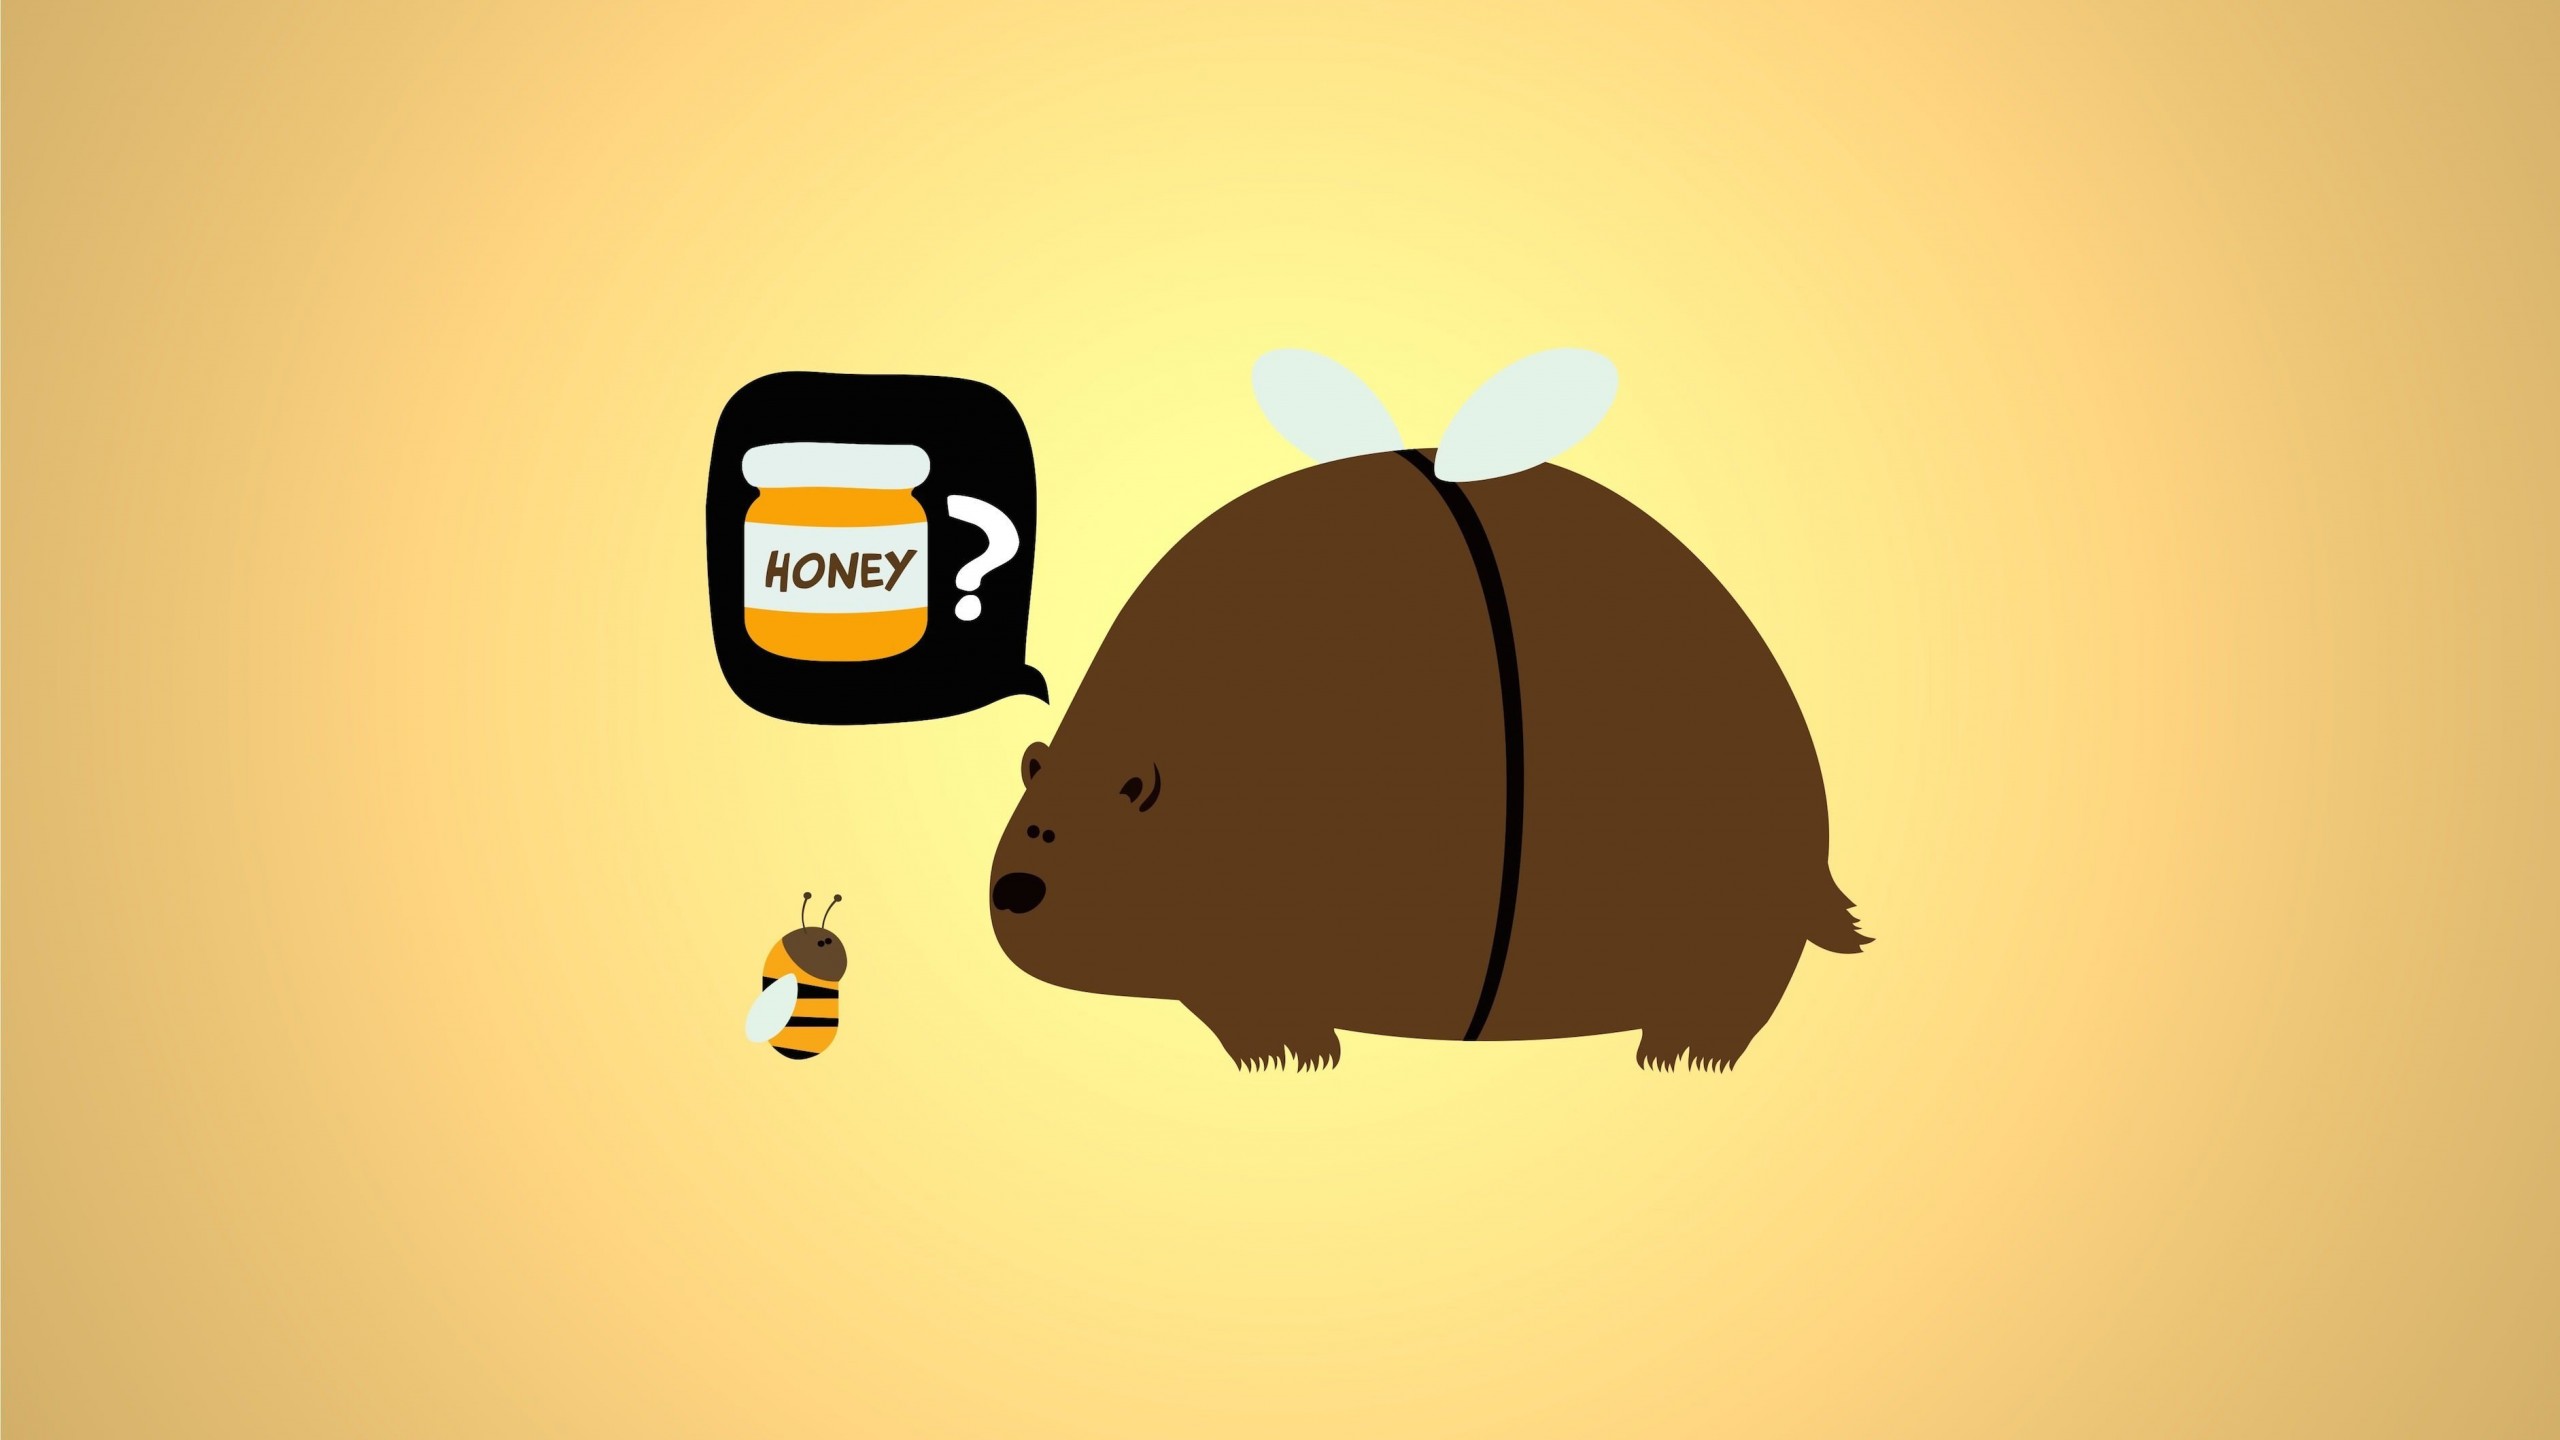 When a Bear Meet a Bee Wallpaper for Social Media YouTube Channel Art